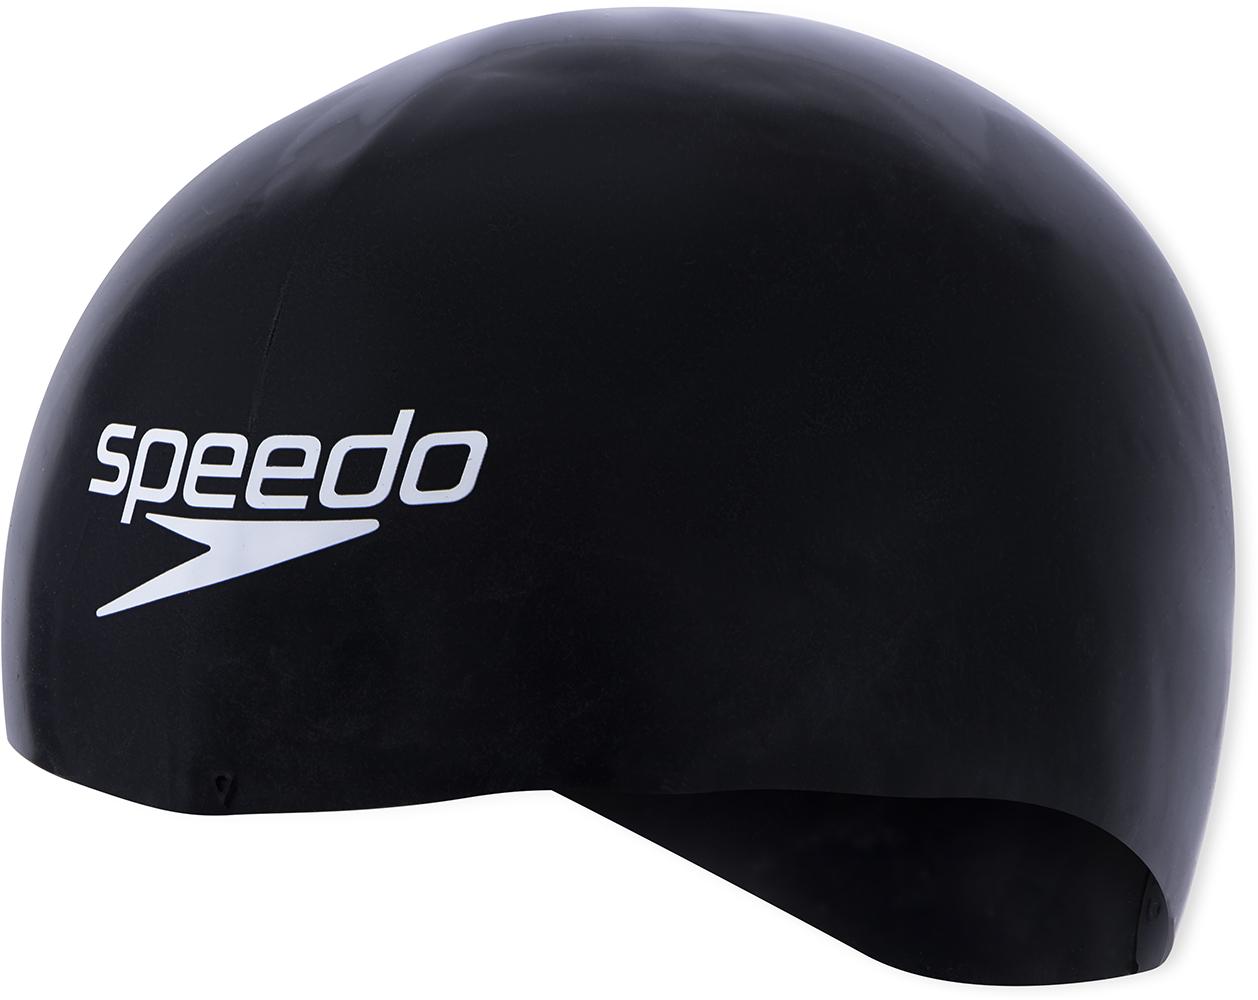 Speedo Fastskin Cap - Black/white